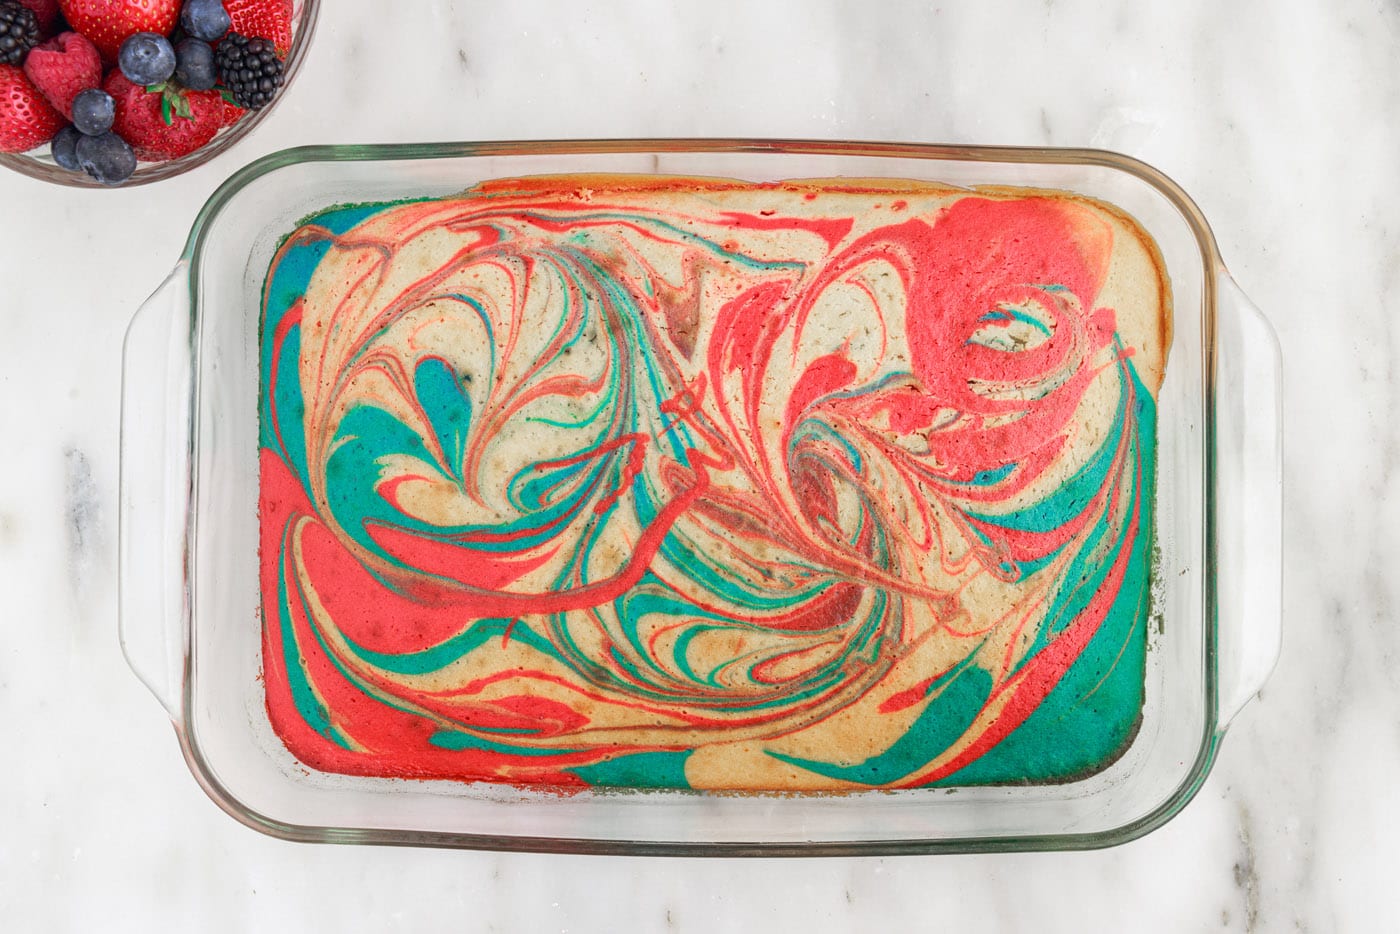 baked patriotic swirled cake